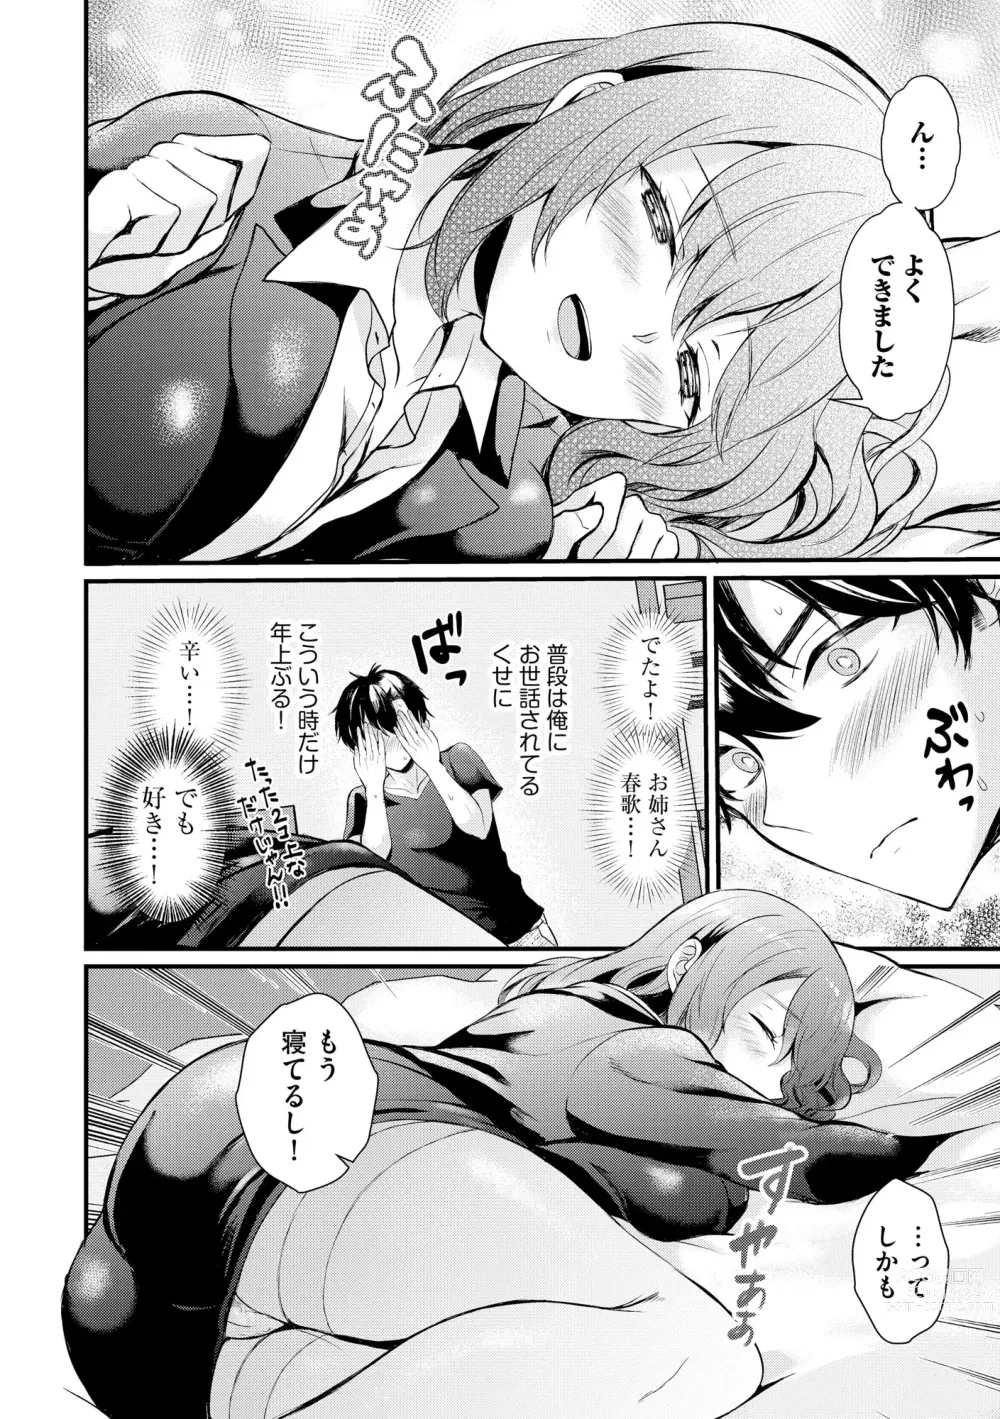 Page 10 of manga Cyberia Plus Vol. 18